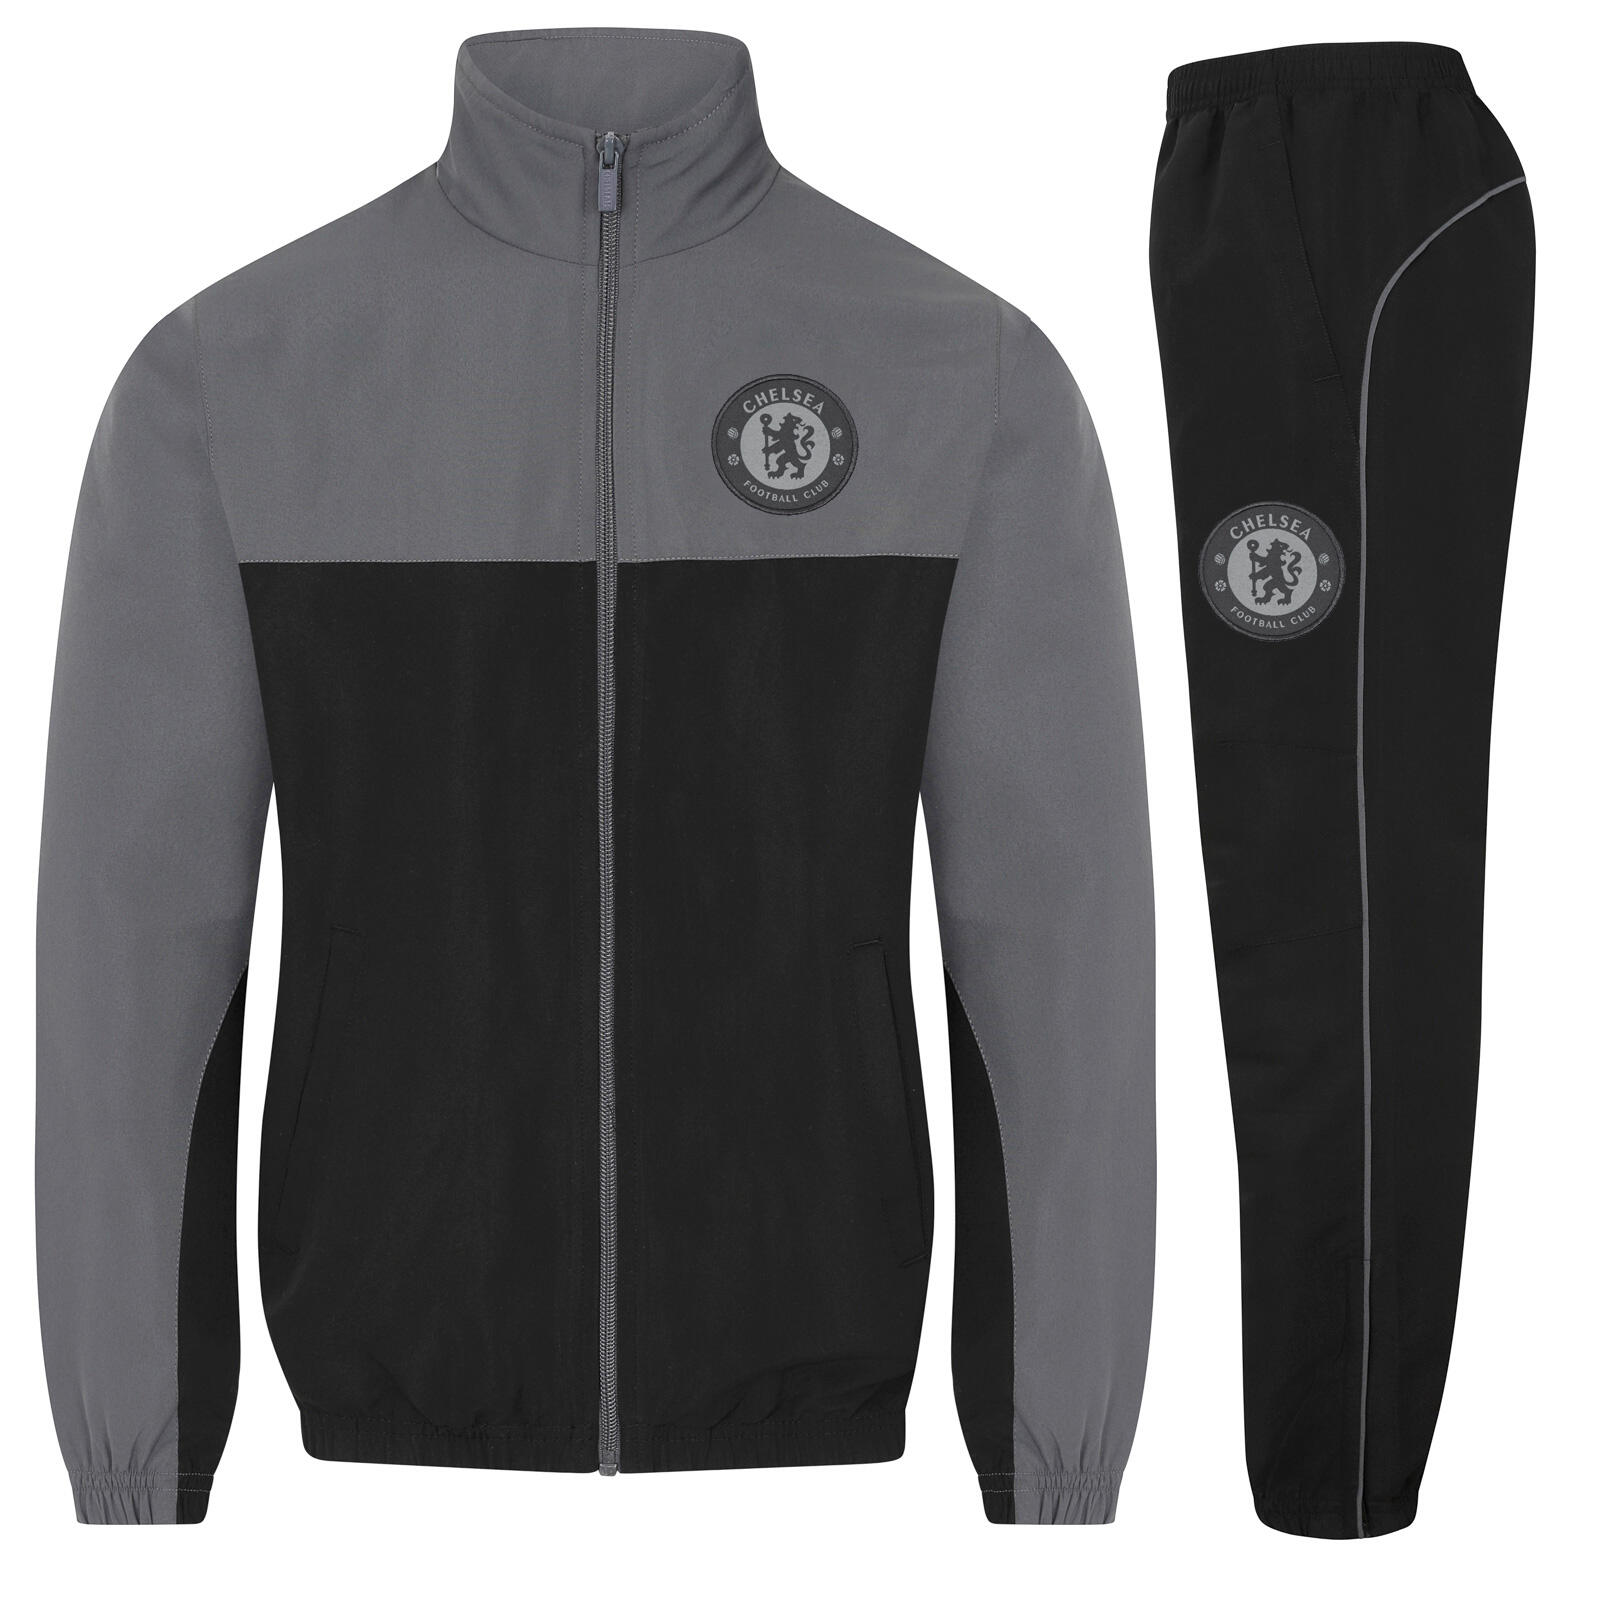 CHELSEA Chelsea FC Boys Tracksuit Jacket & Pants Set Kids OFFICIAL Football Gift